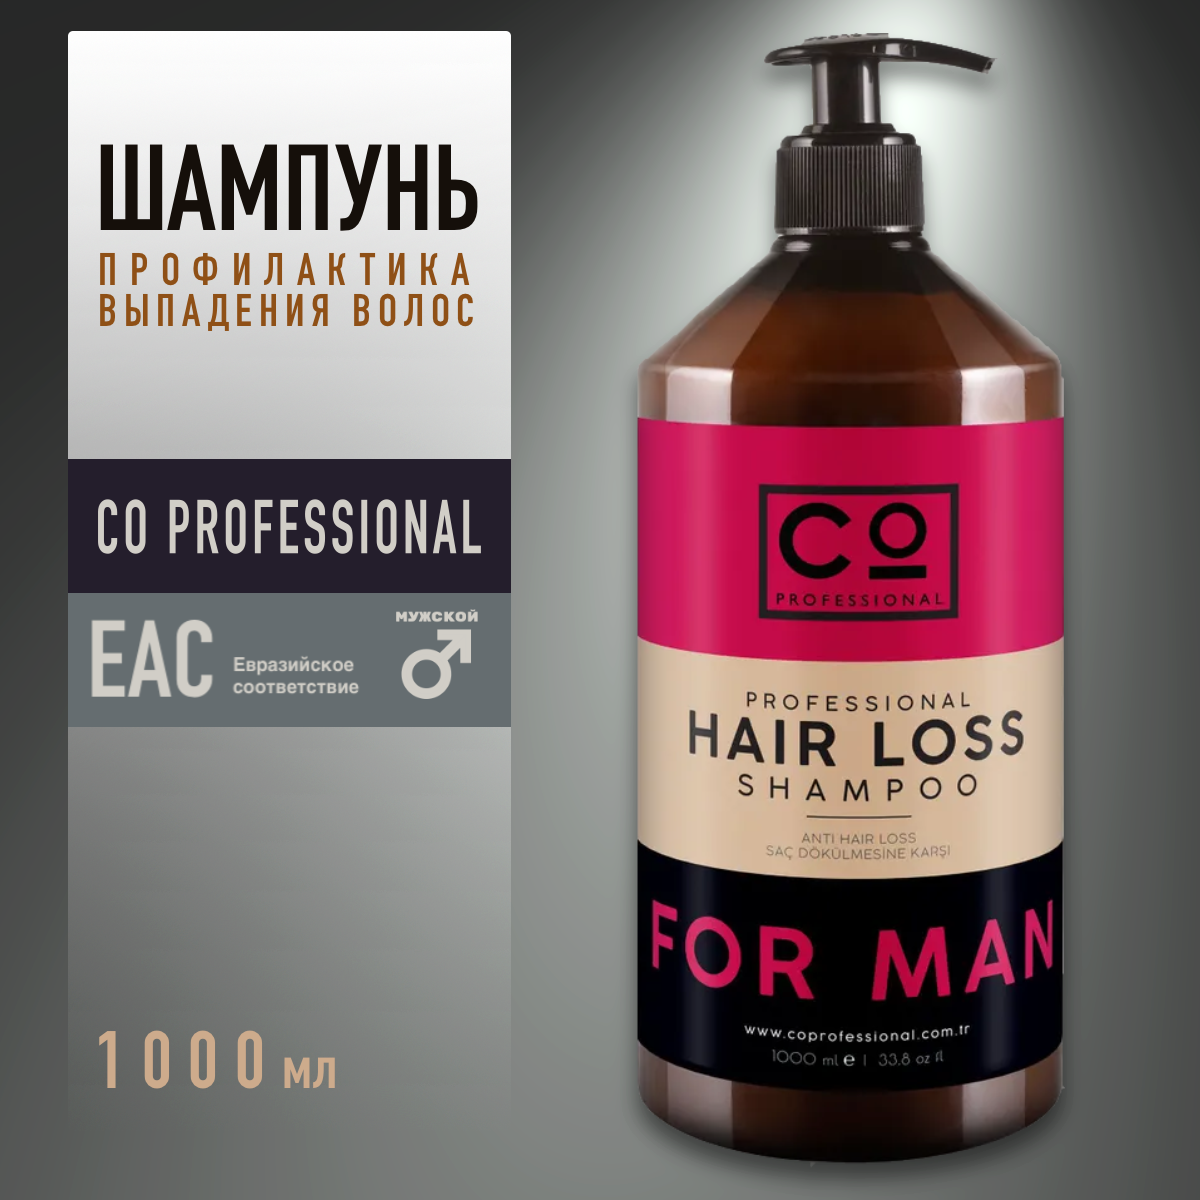 Шампунь против выпадения волос CO PROFESSIONAL FOR MAN Hair Loss Shampoo, 1000 мл